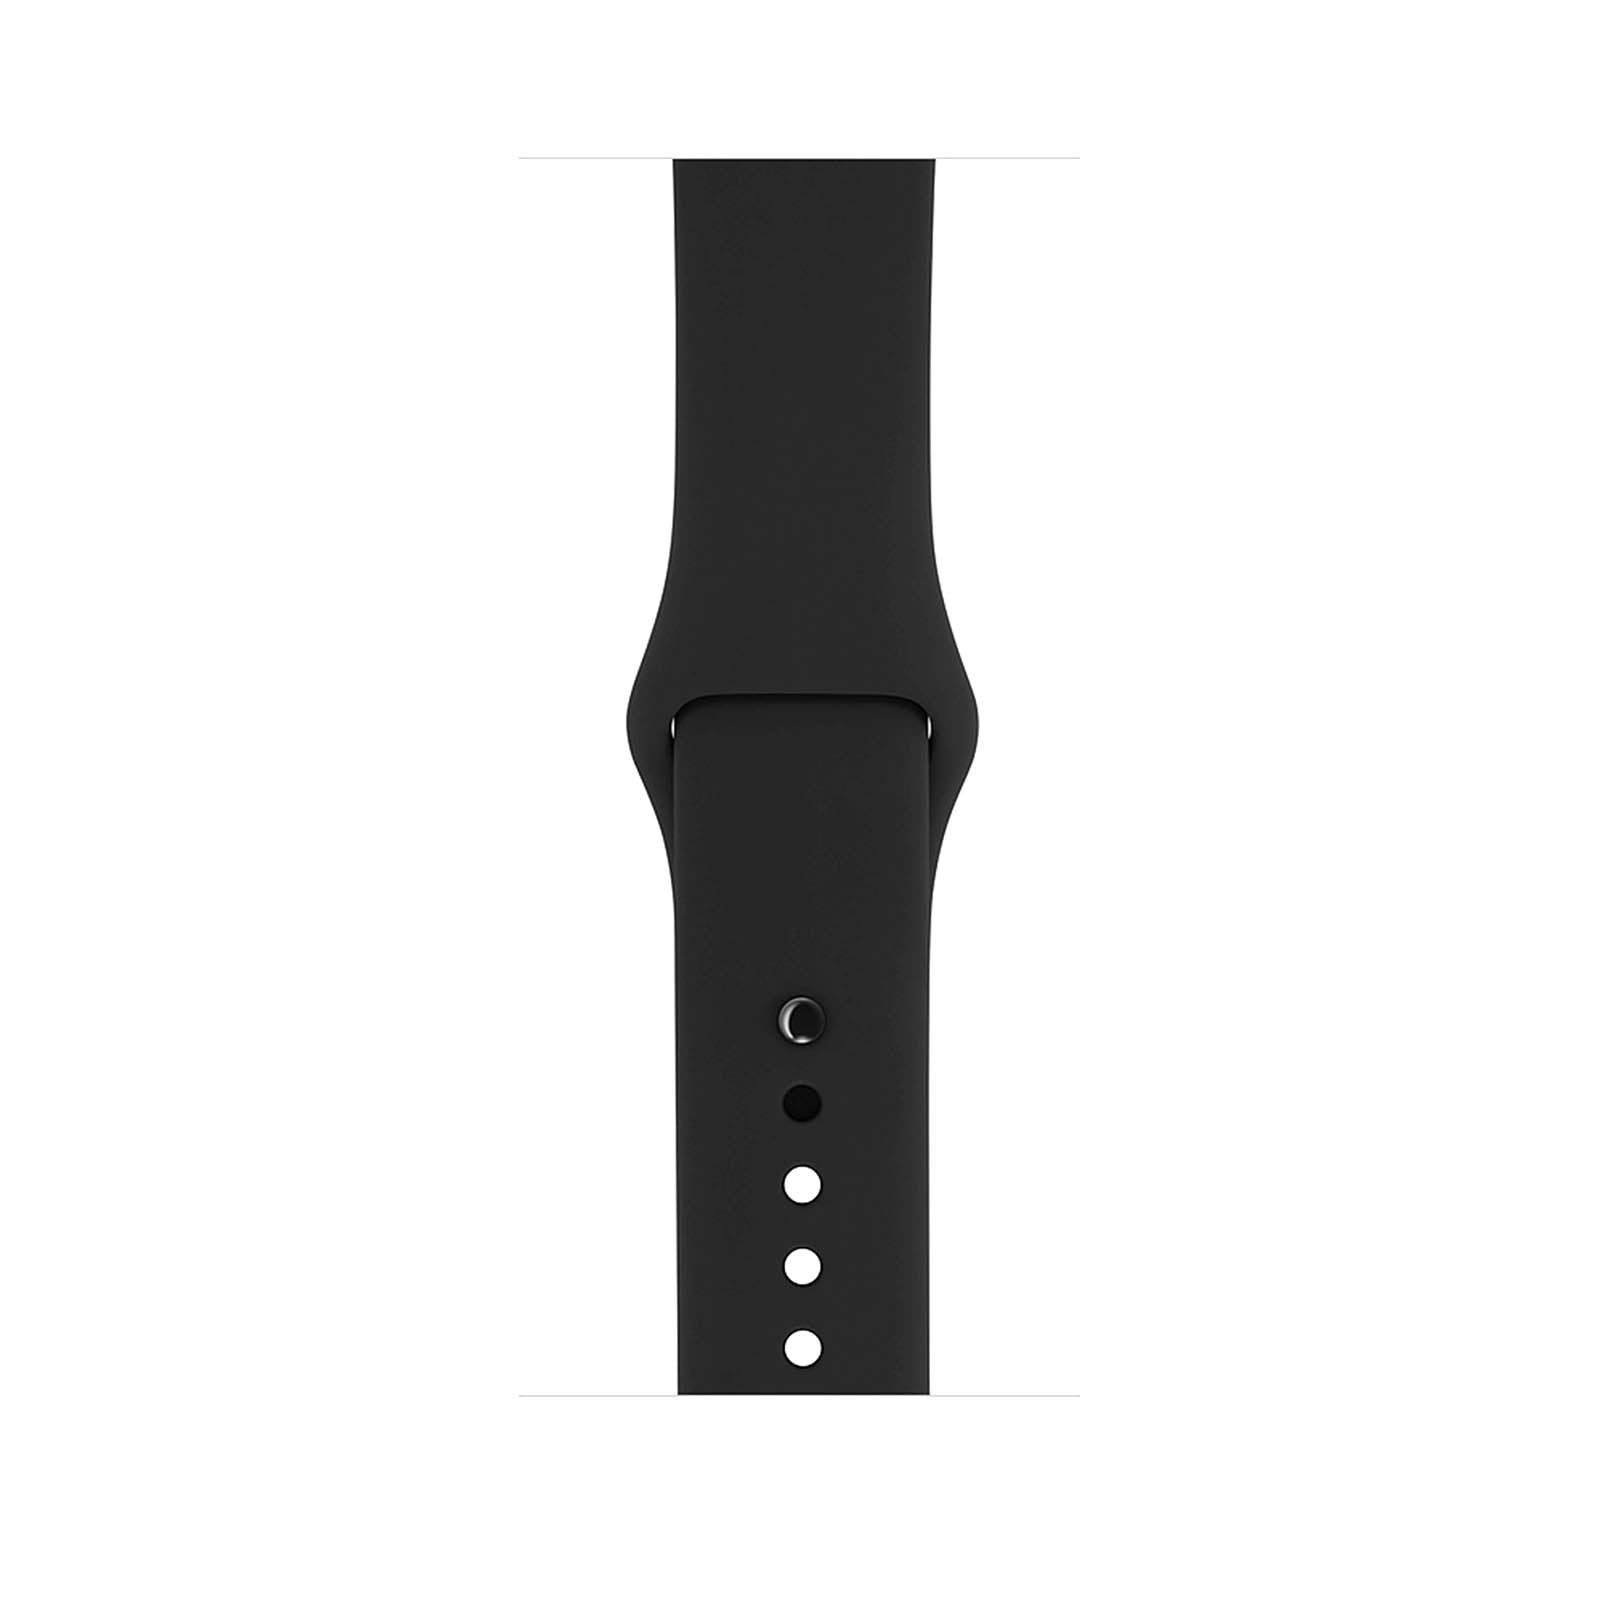 Apple Watch Series 5 Stainless 44mm Black Pristine Unlocked